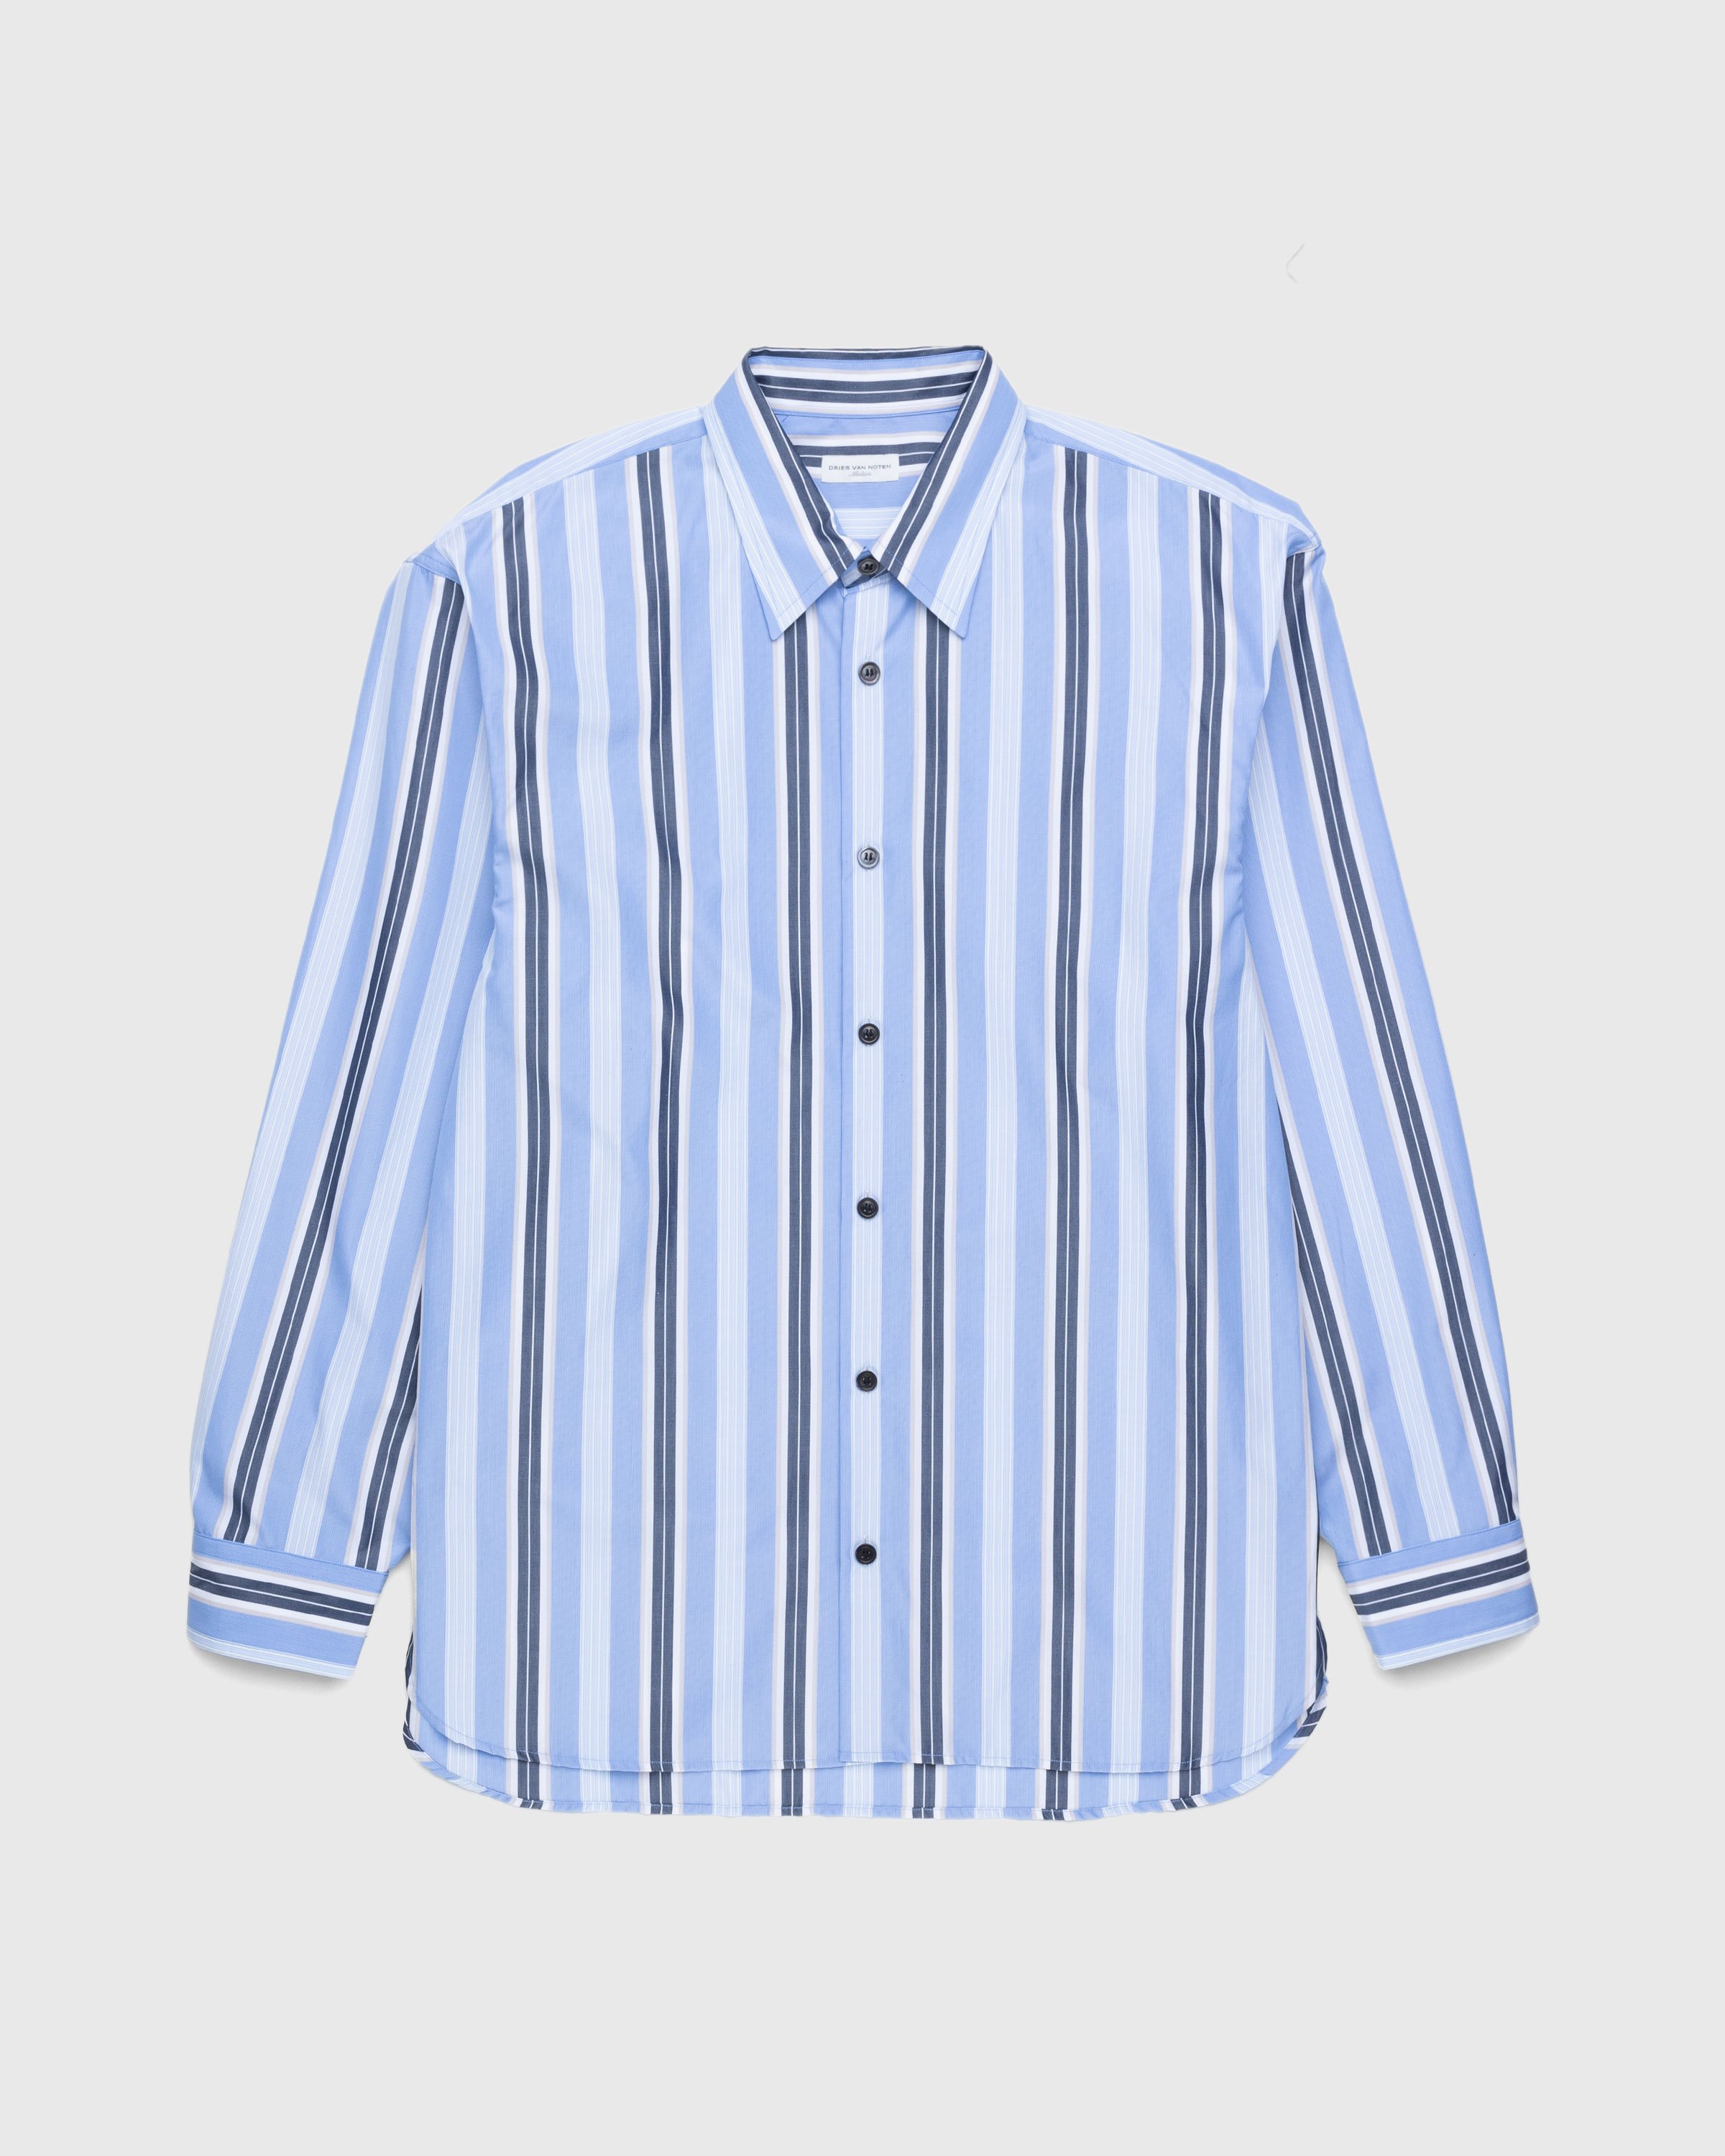 Dries van Noten - Croom Shirt Light Blue - Clothing - Blue - Image 1